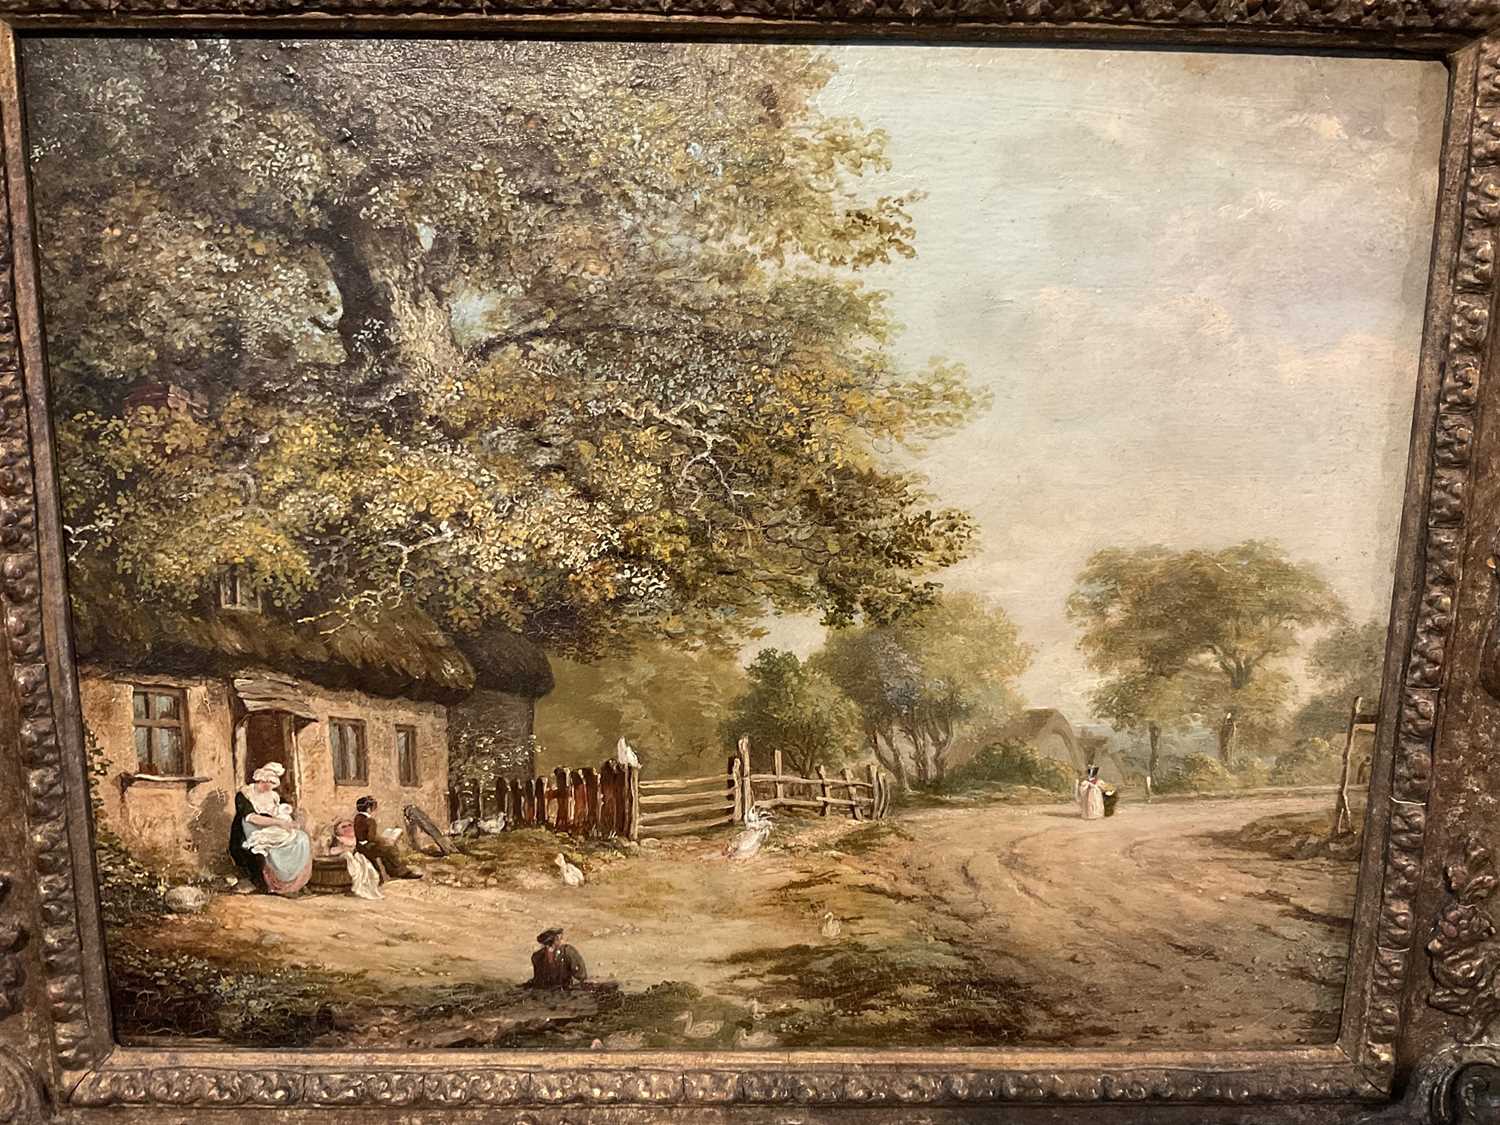 19th century English School, oil on panel, Cottage scene with figures, 27 x 33cm